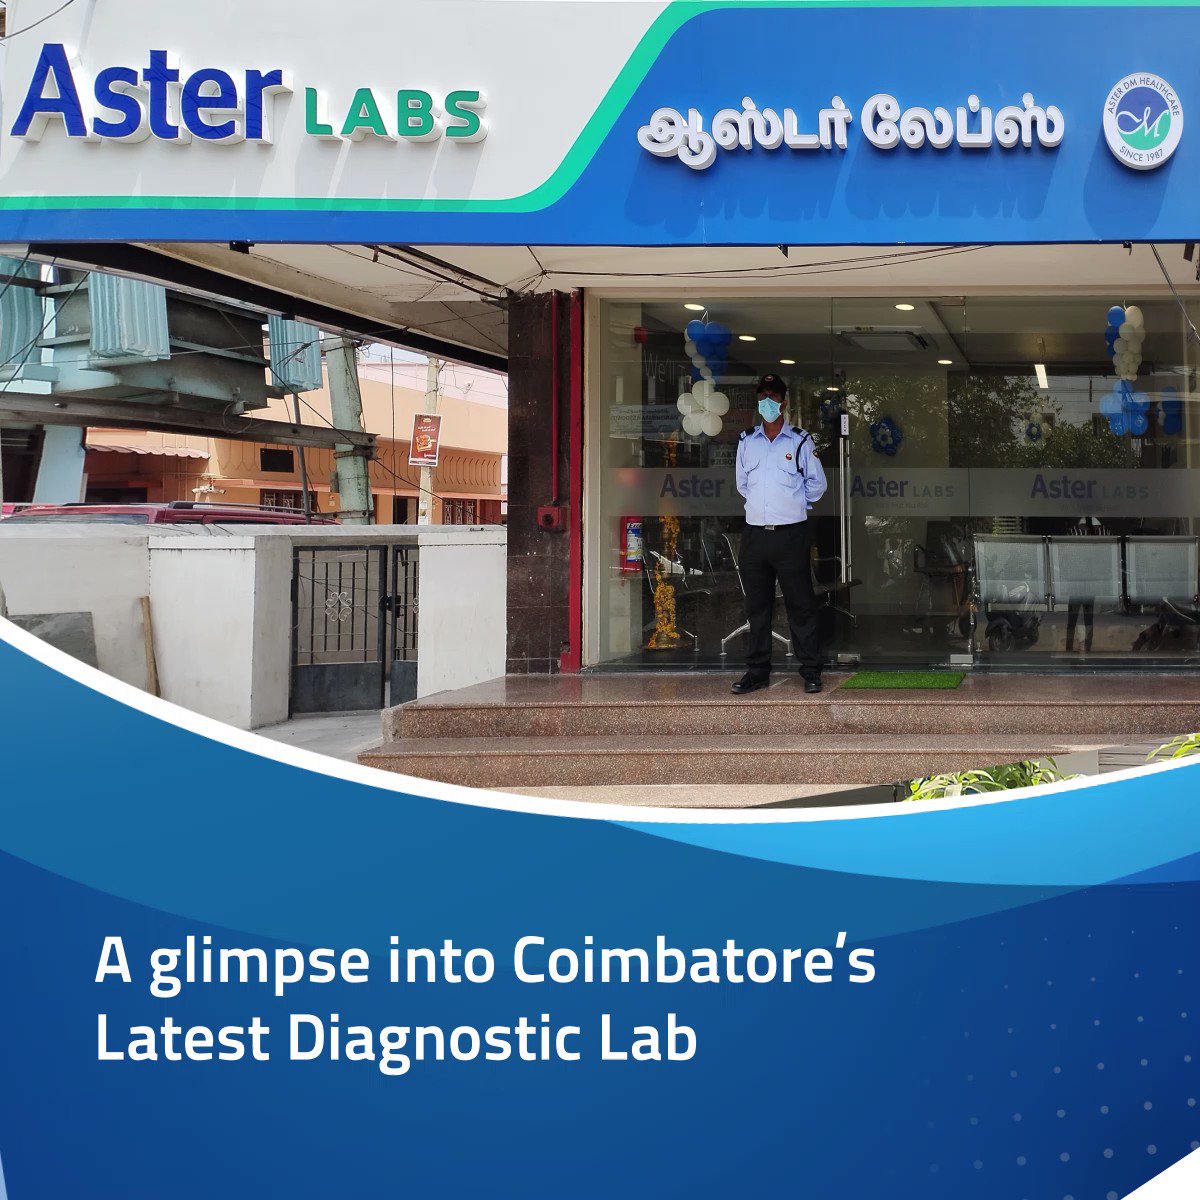 Aster Nurture program at Aster Medcity, Kochi | Aster